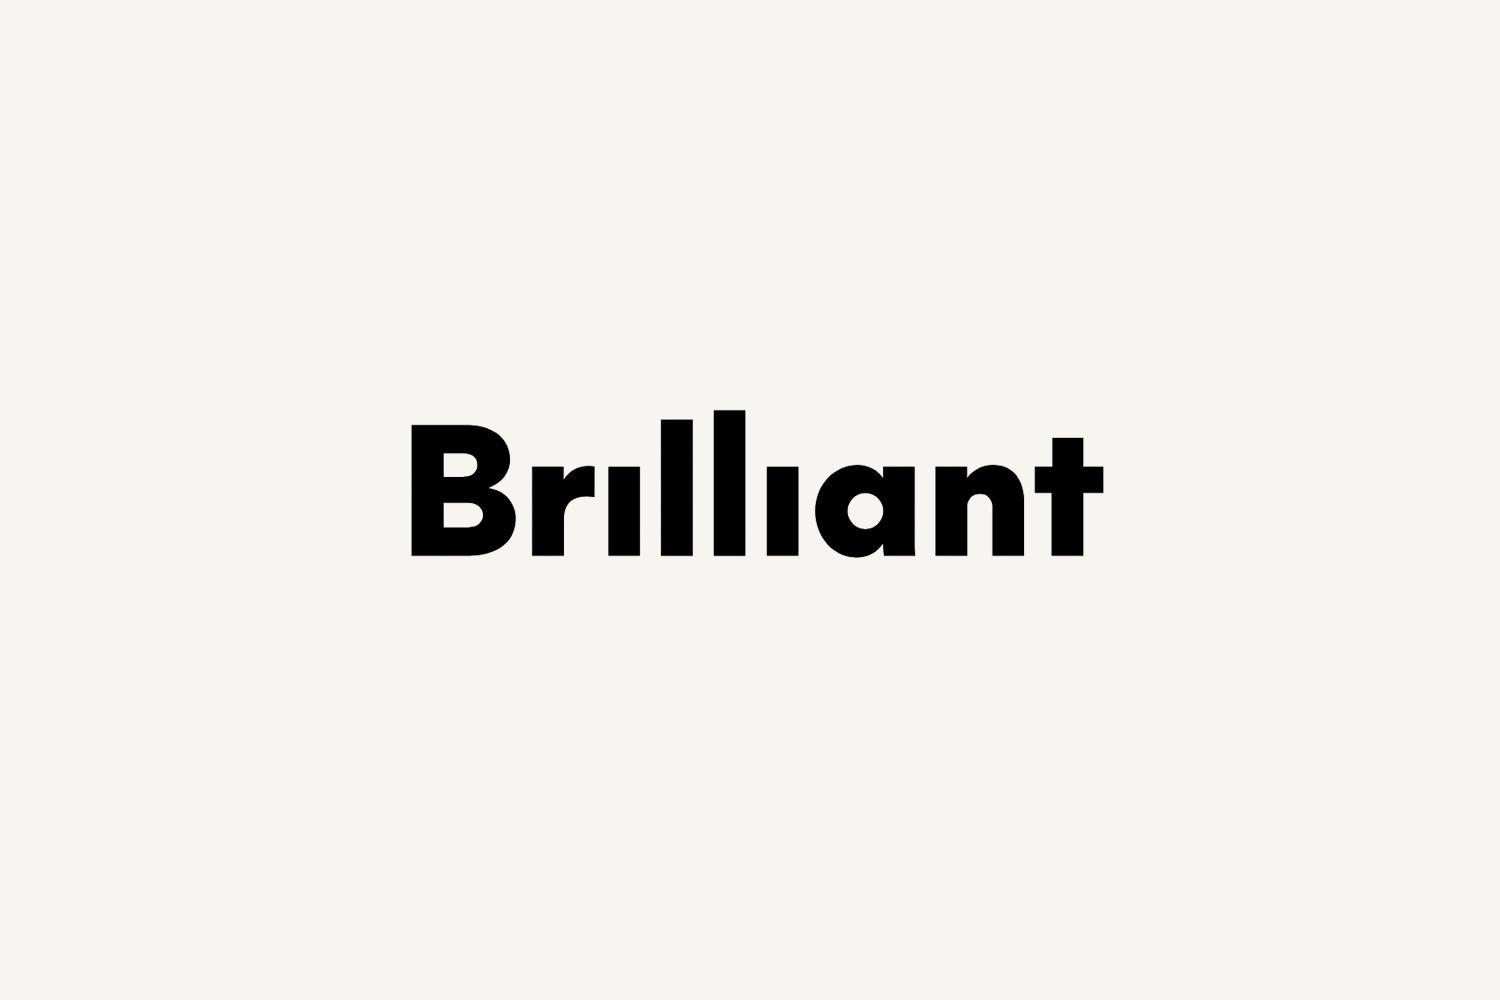 Brilliant Logo - The Best Logo Designs of 2018